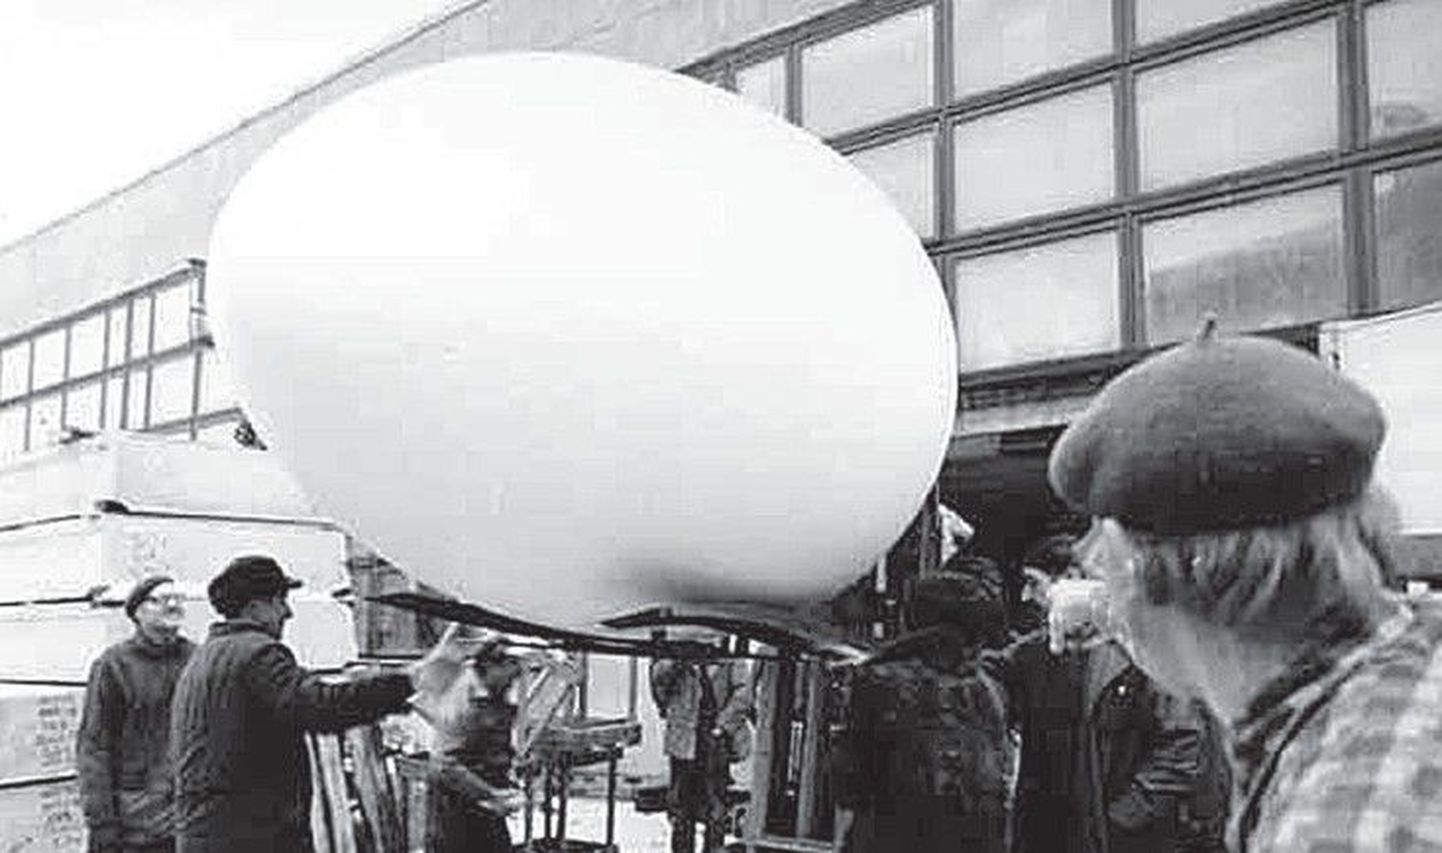 В 1978 году скульптуру в виде яйца изготовил химкобминат Orto.